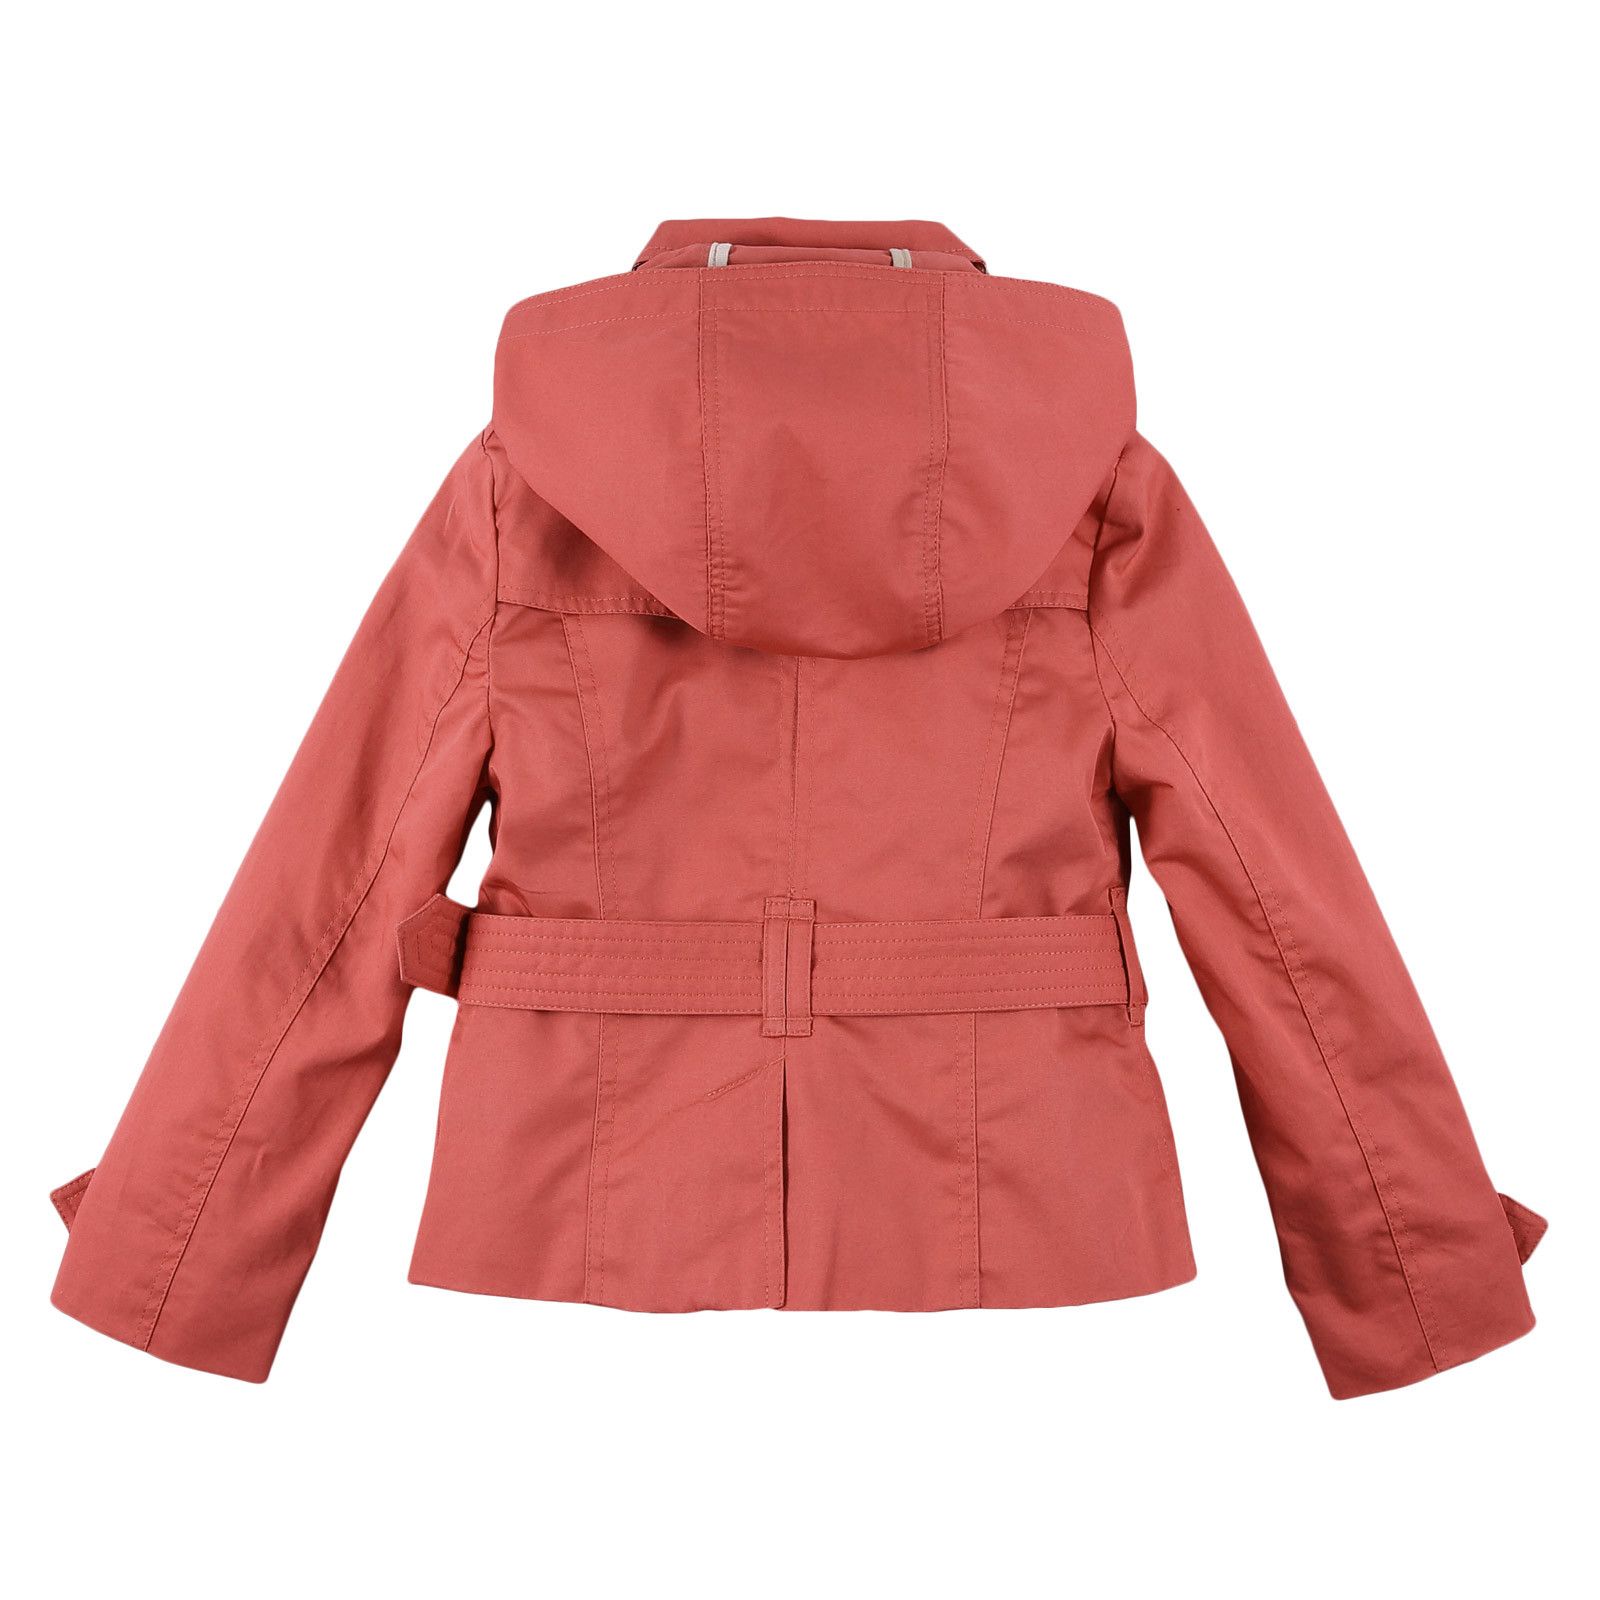 Girls Bright Copper Pink Hooded Cotton Jacket - CÉMAROSE | Children's Fashion Store - 2